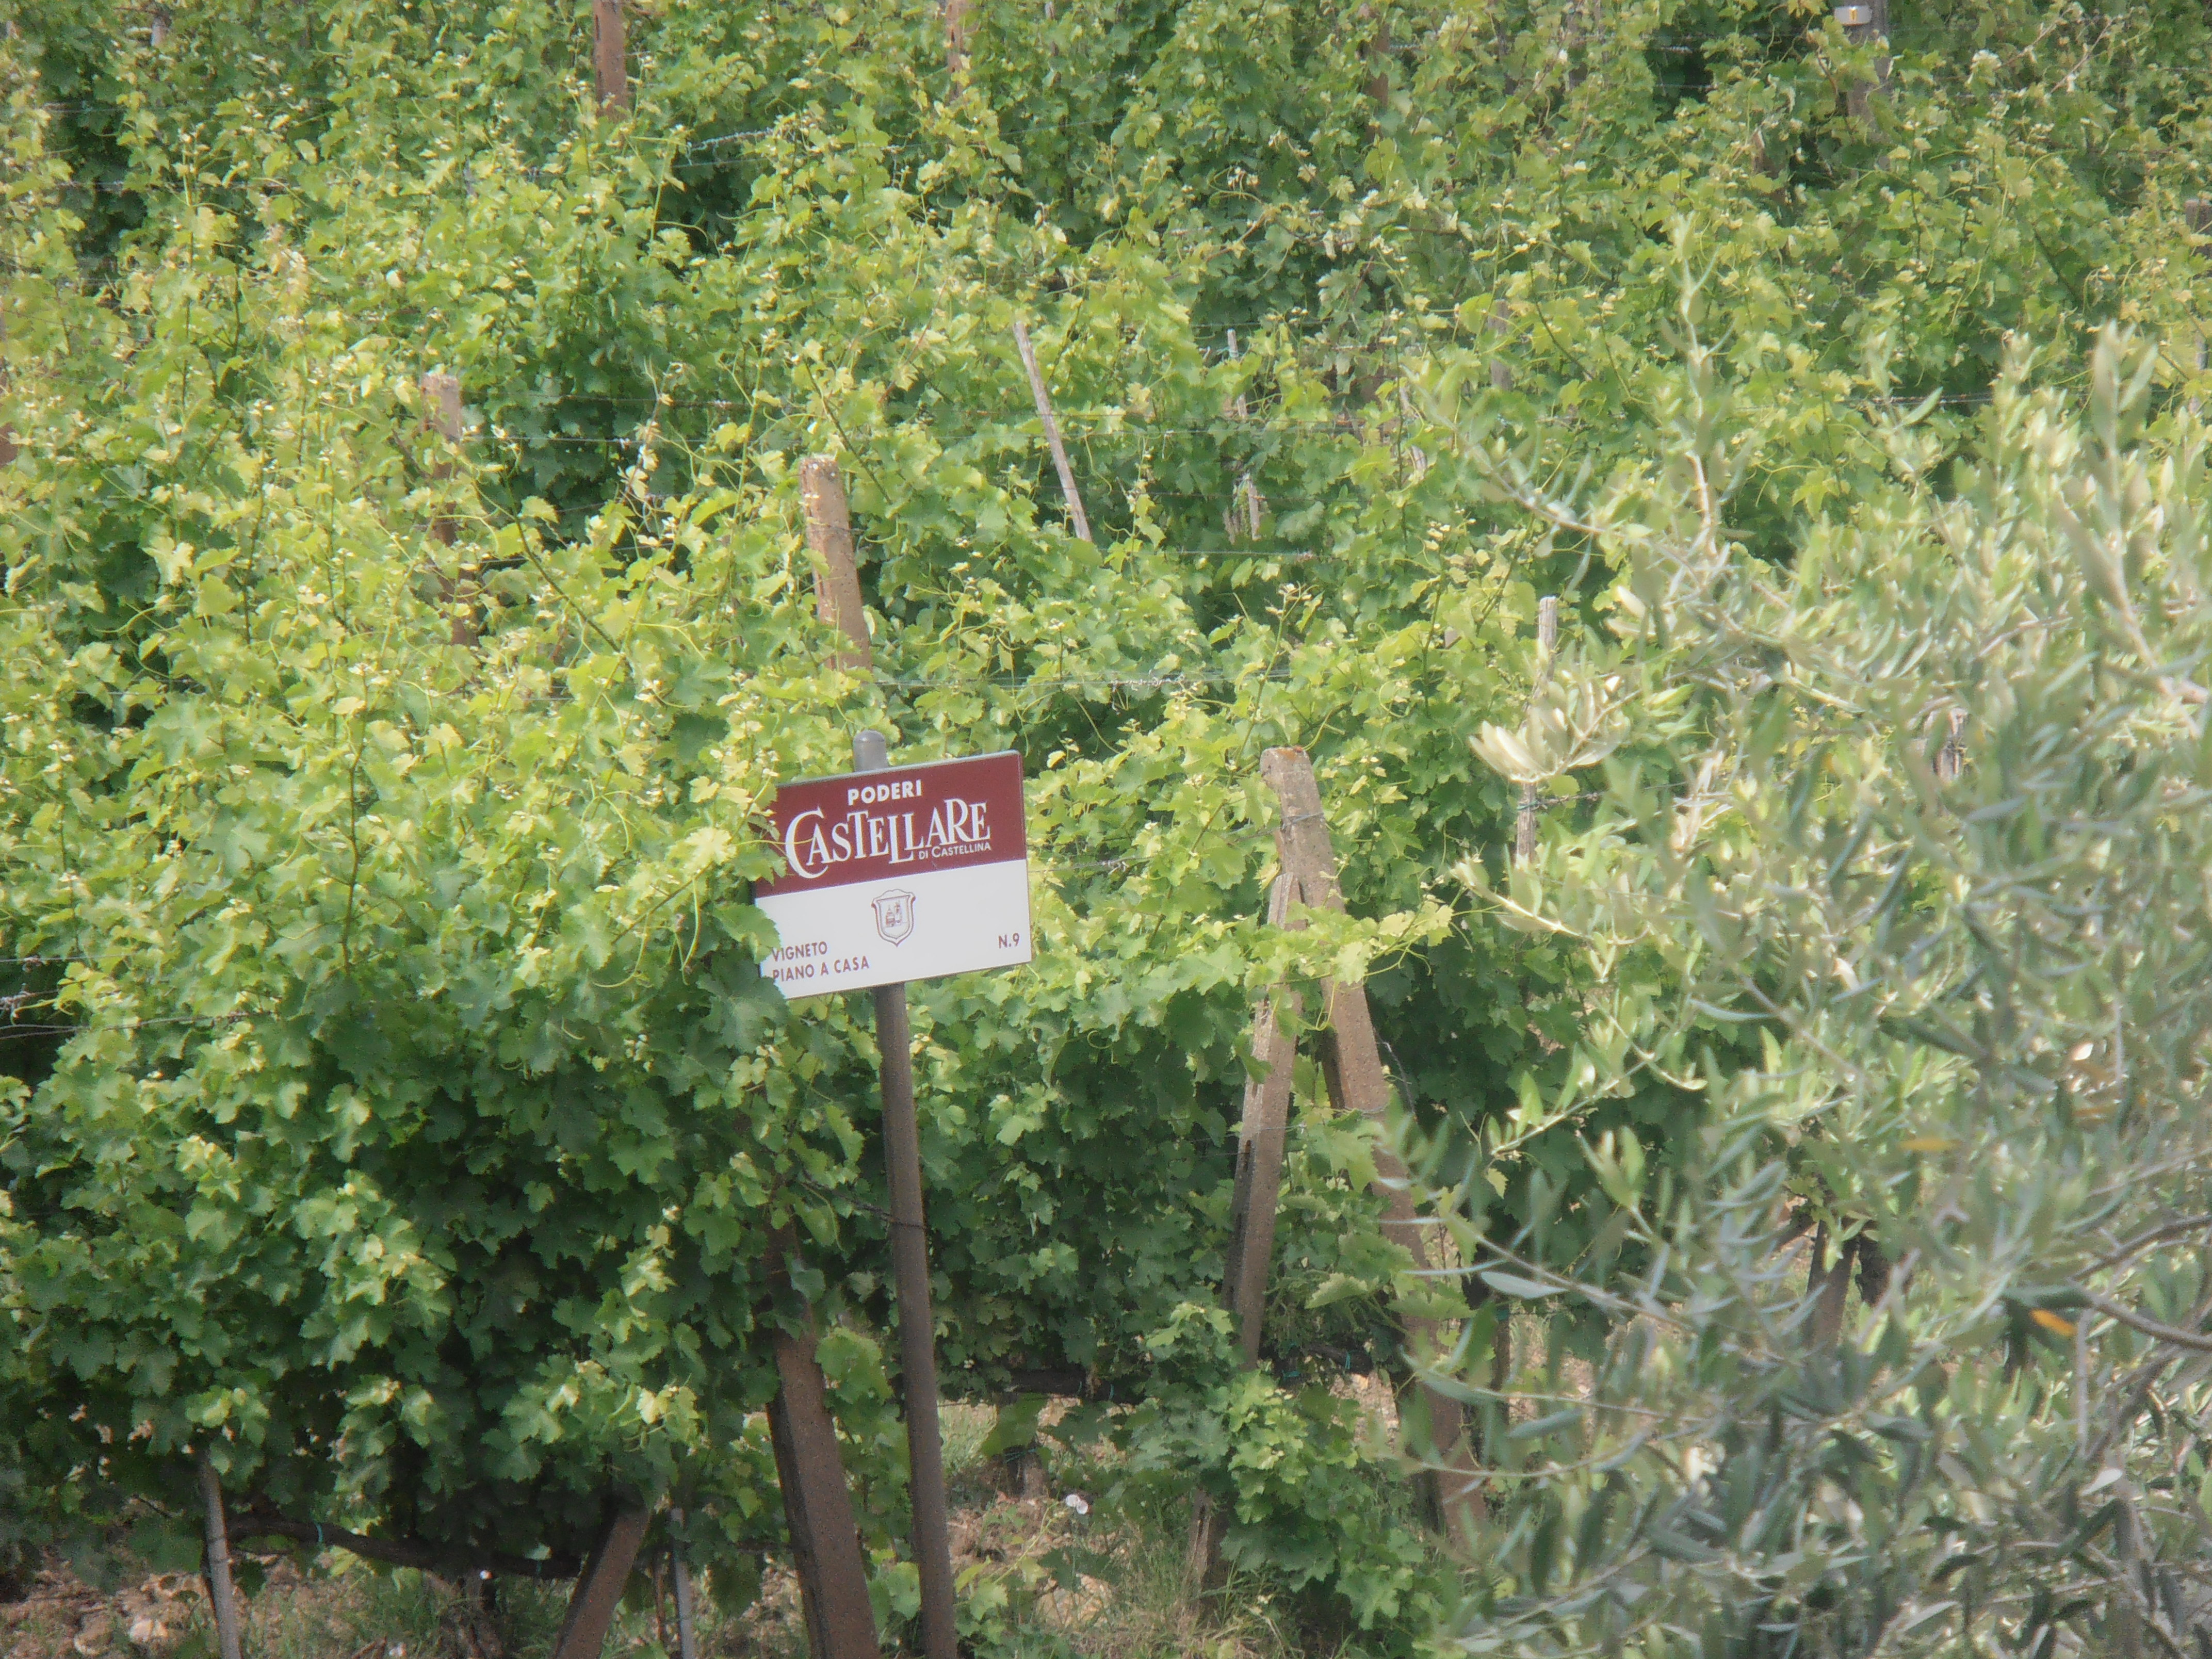 Wijngaard Castellare